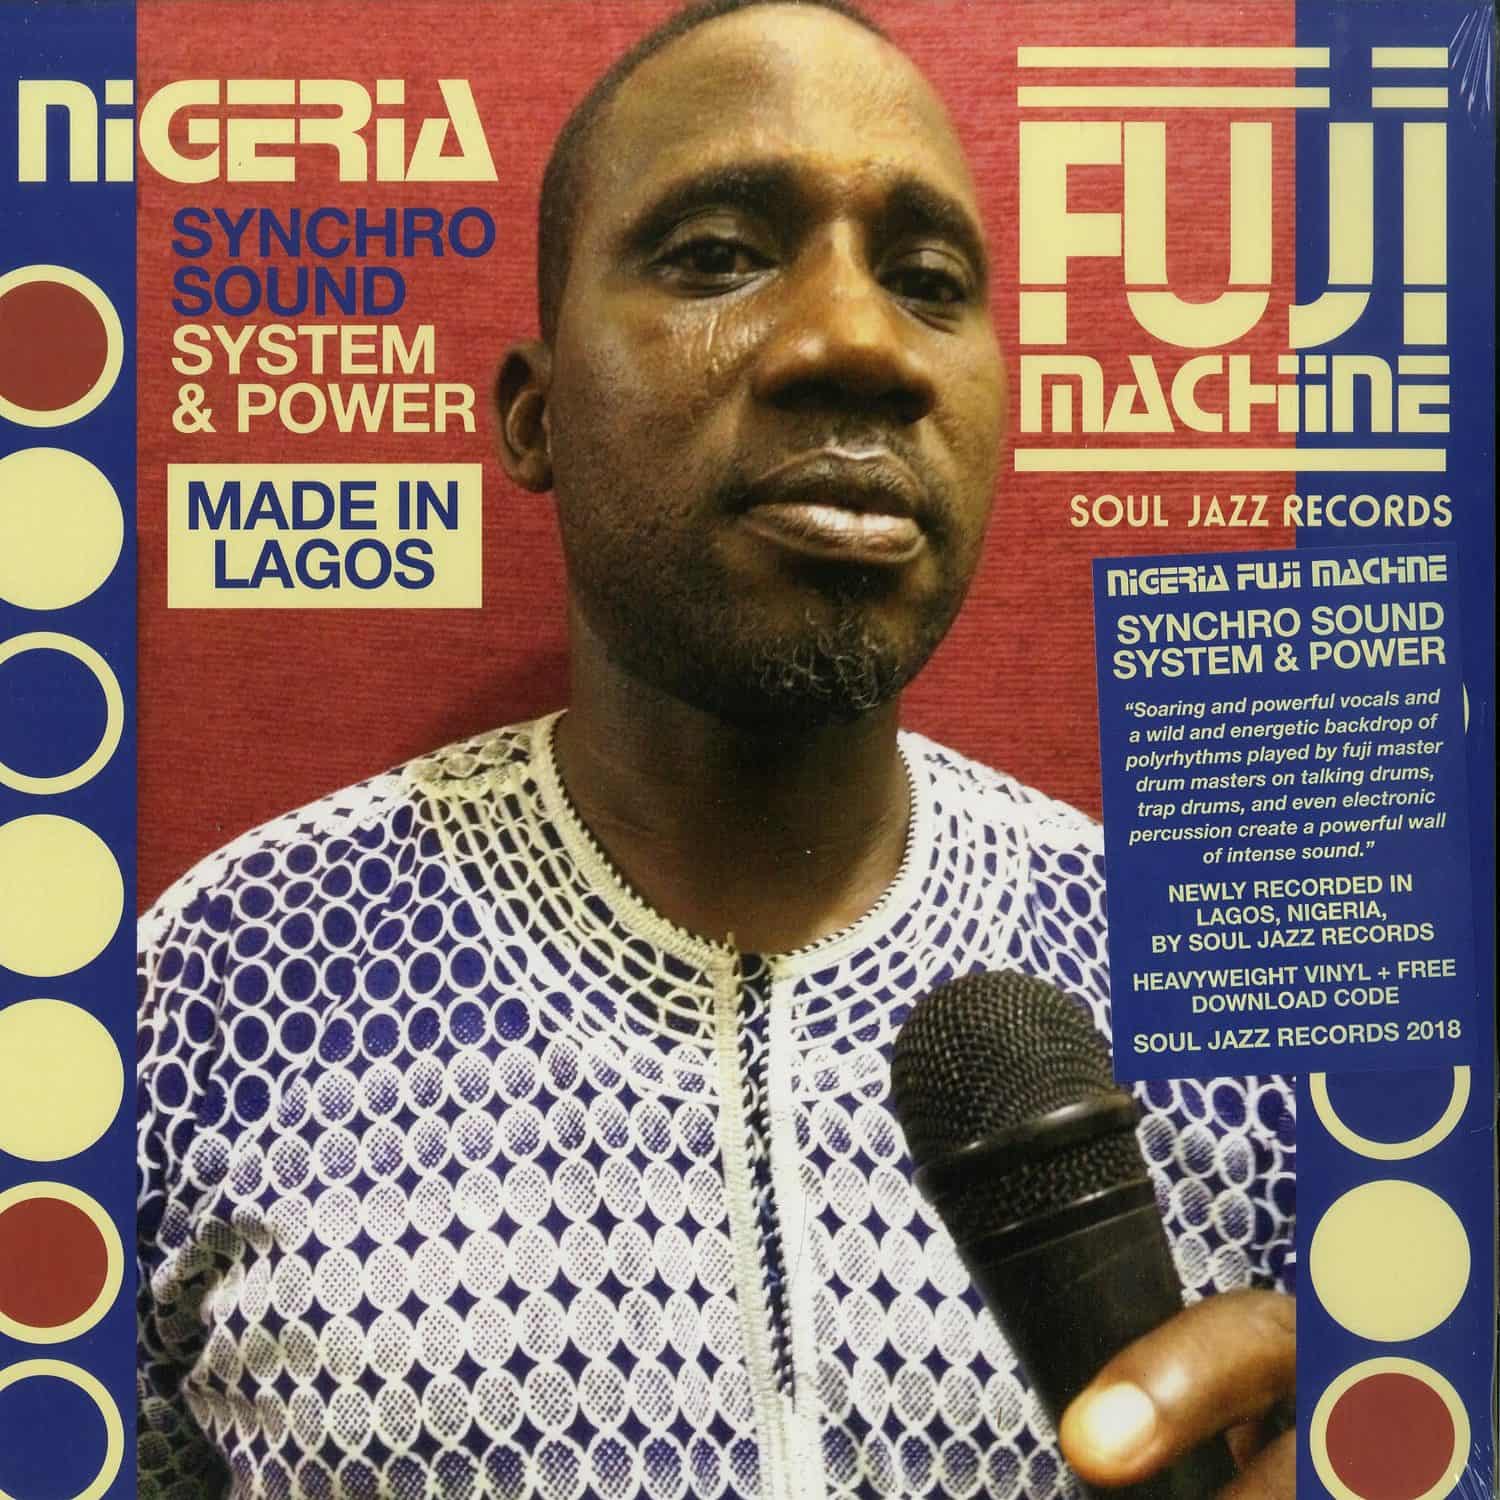 Various Artists - NIGERIA FUJI MACHINE - SYNCHRO SOUND SYSTEM & POWER 